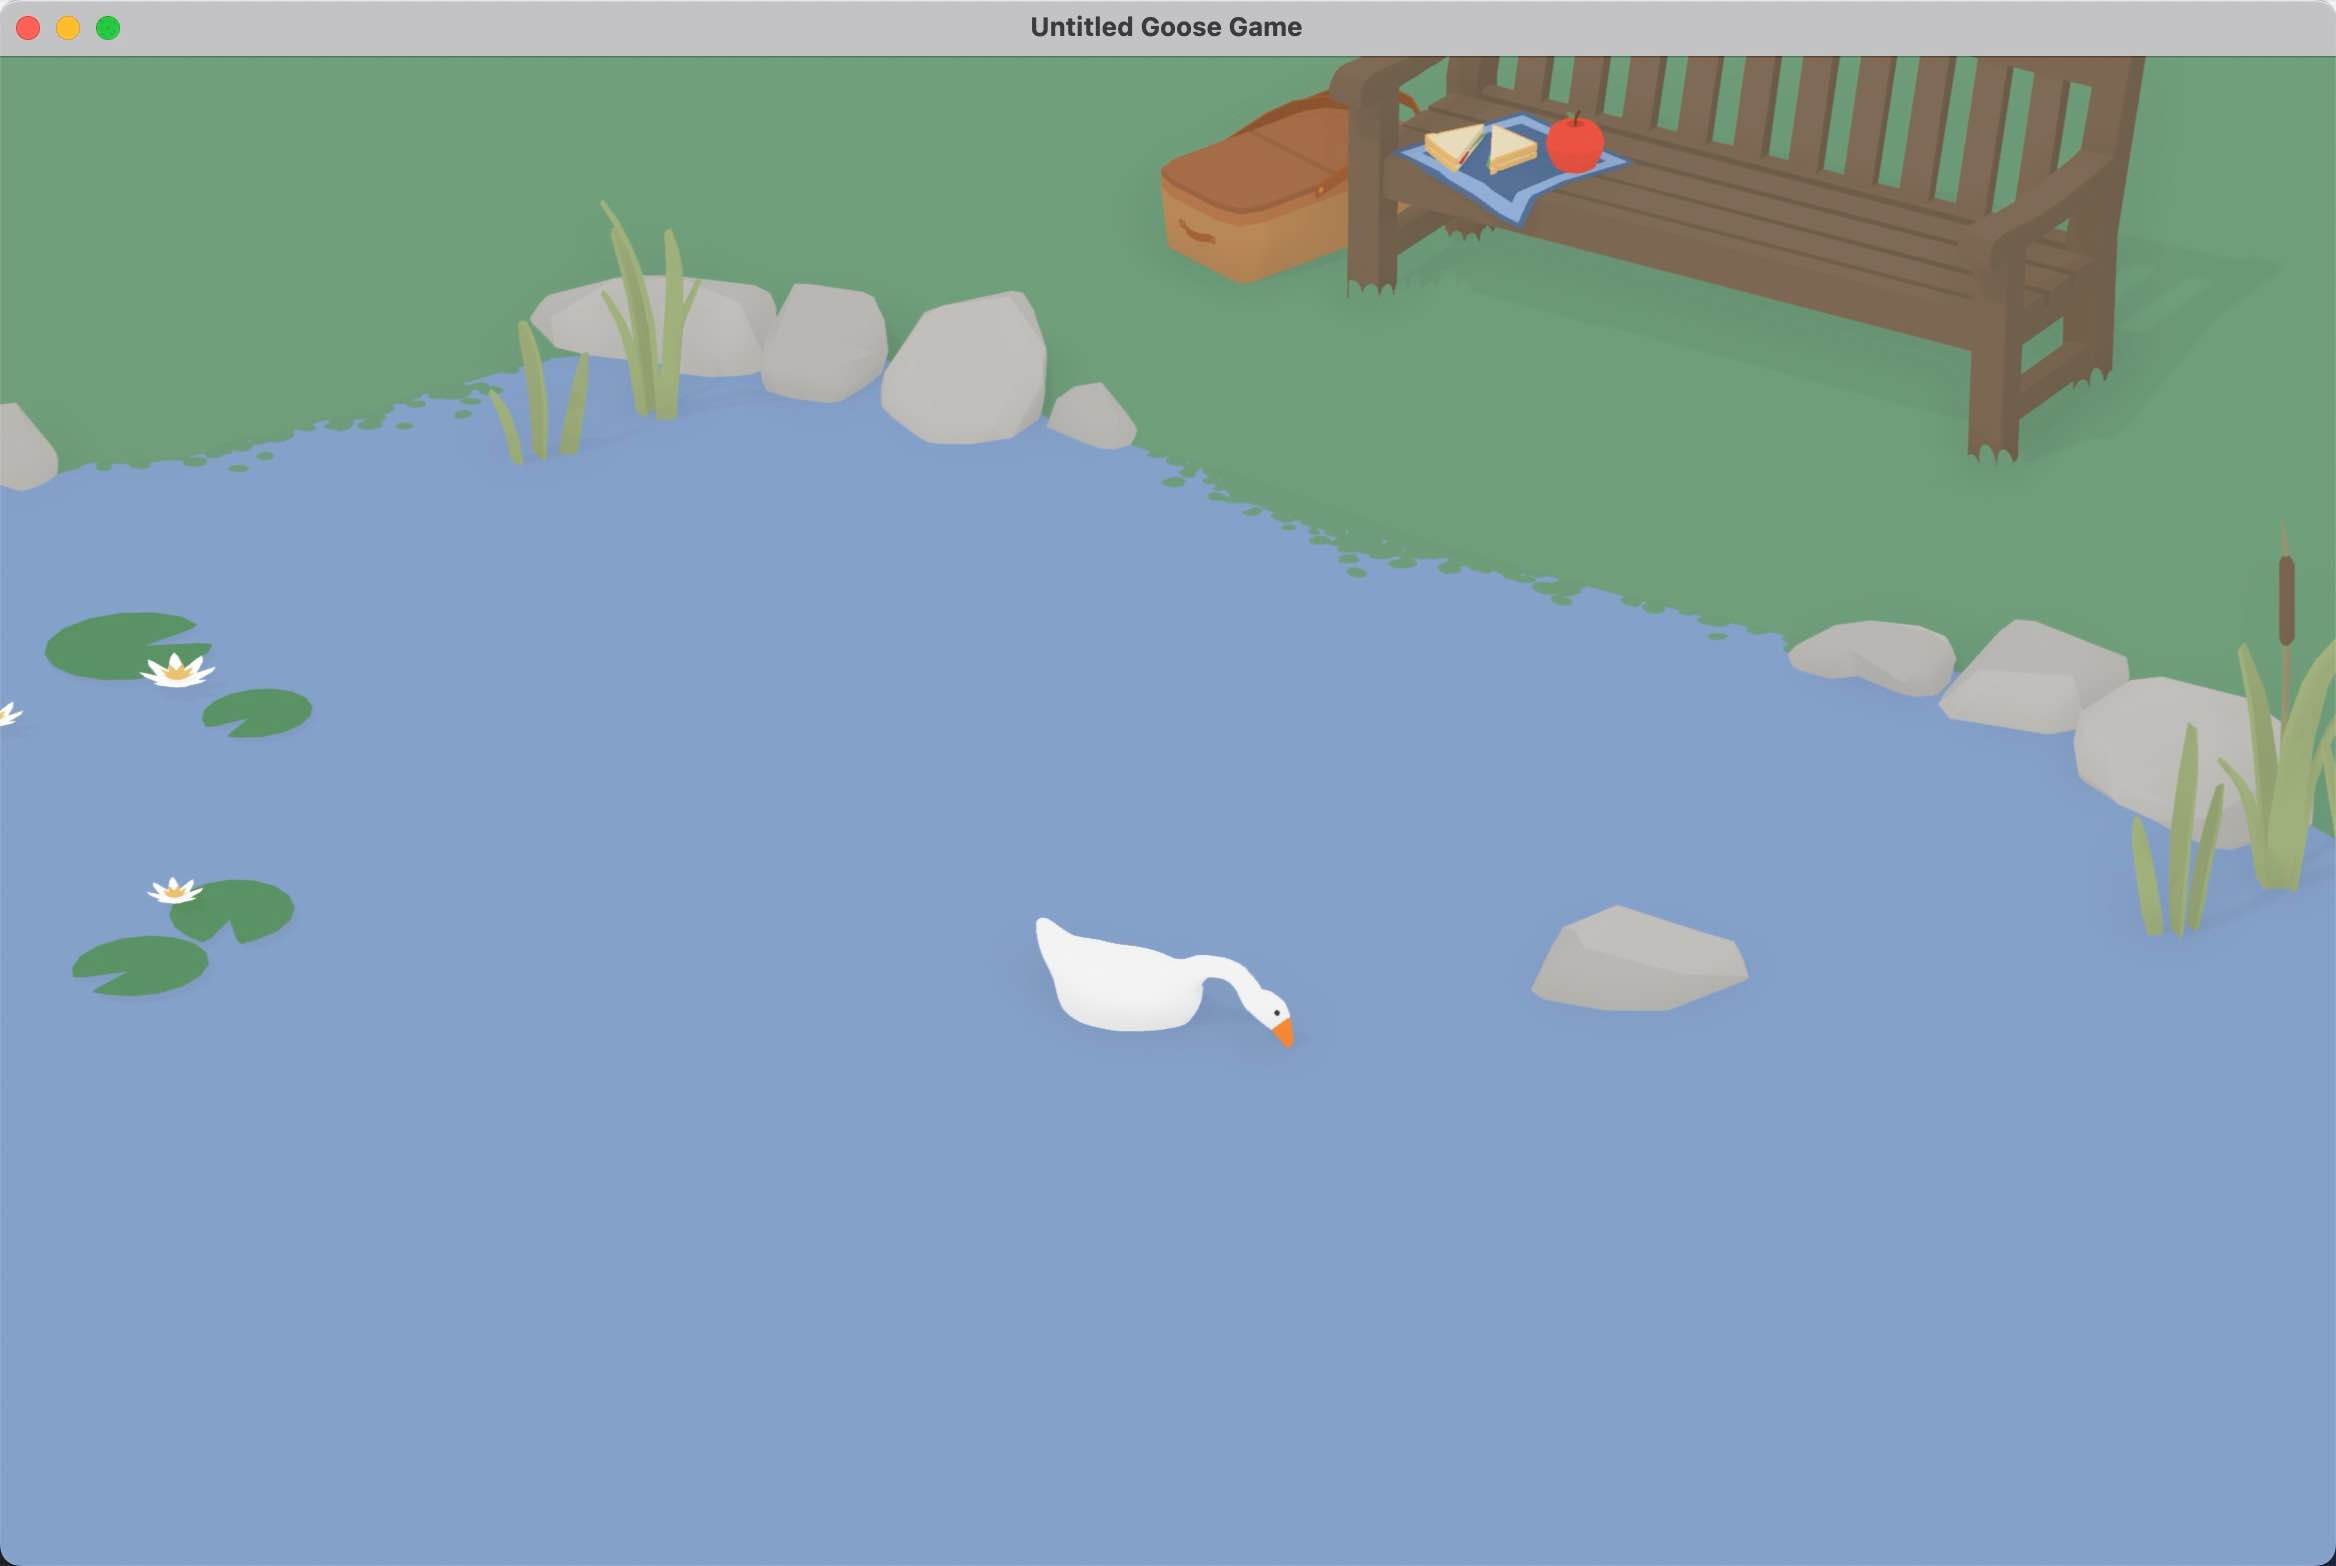 模拟大鹅 for Mac v1.1.4 Untitled Goose Game 中文原生版 苹果电脑